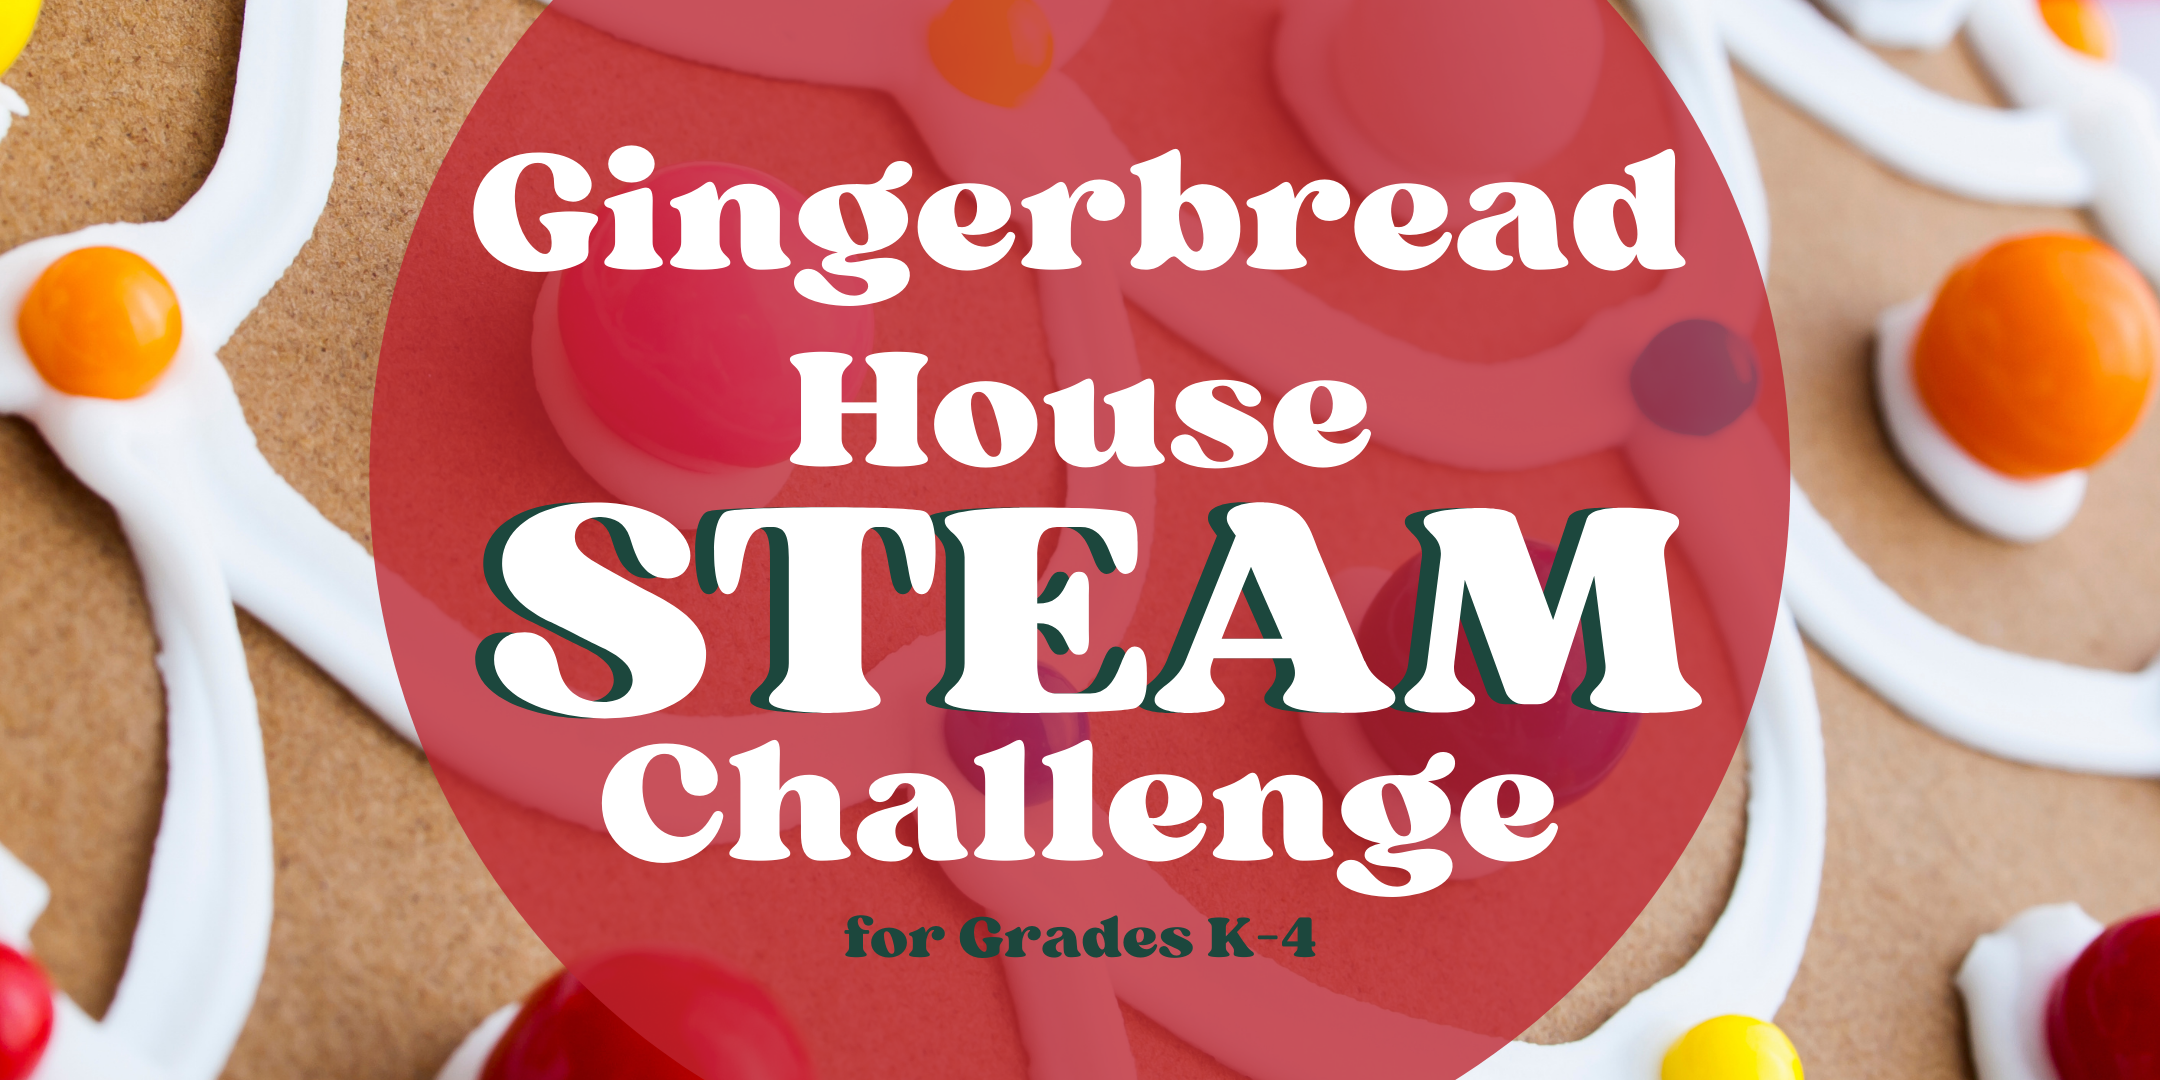 Gingerbread House STEAM Challenge for Grades K–4 event image